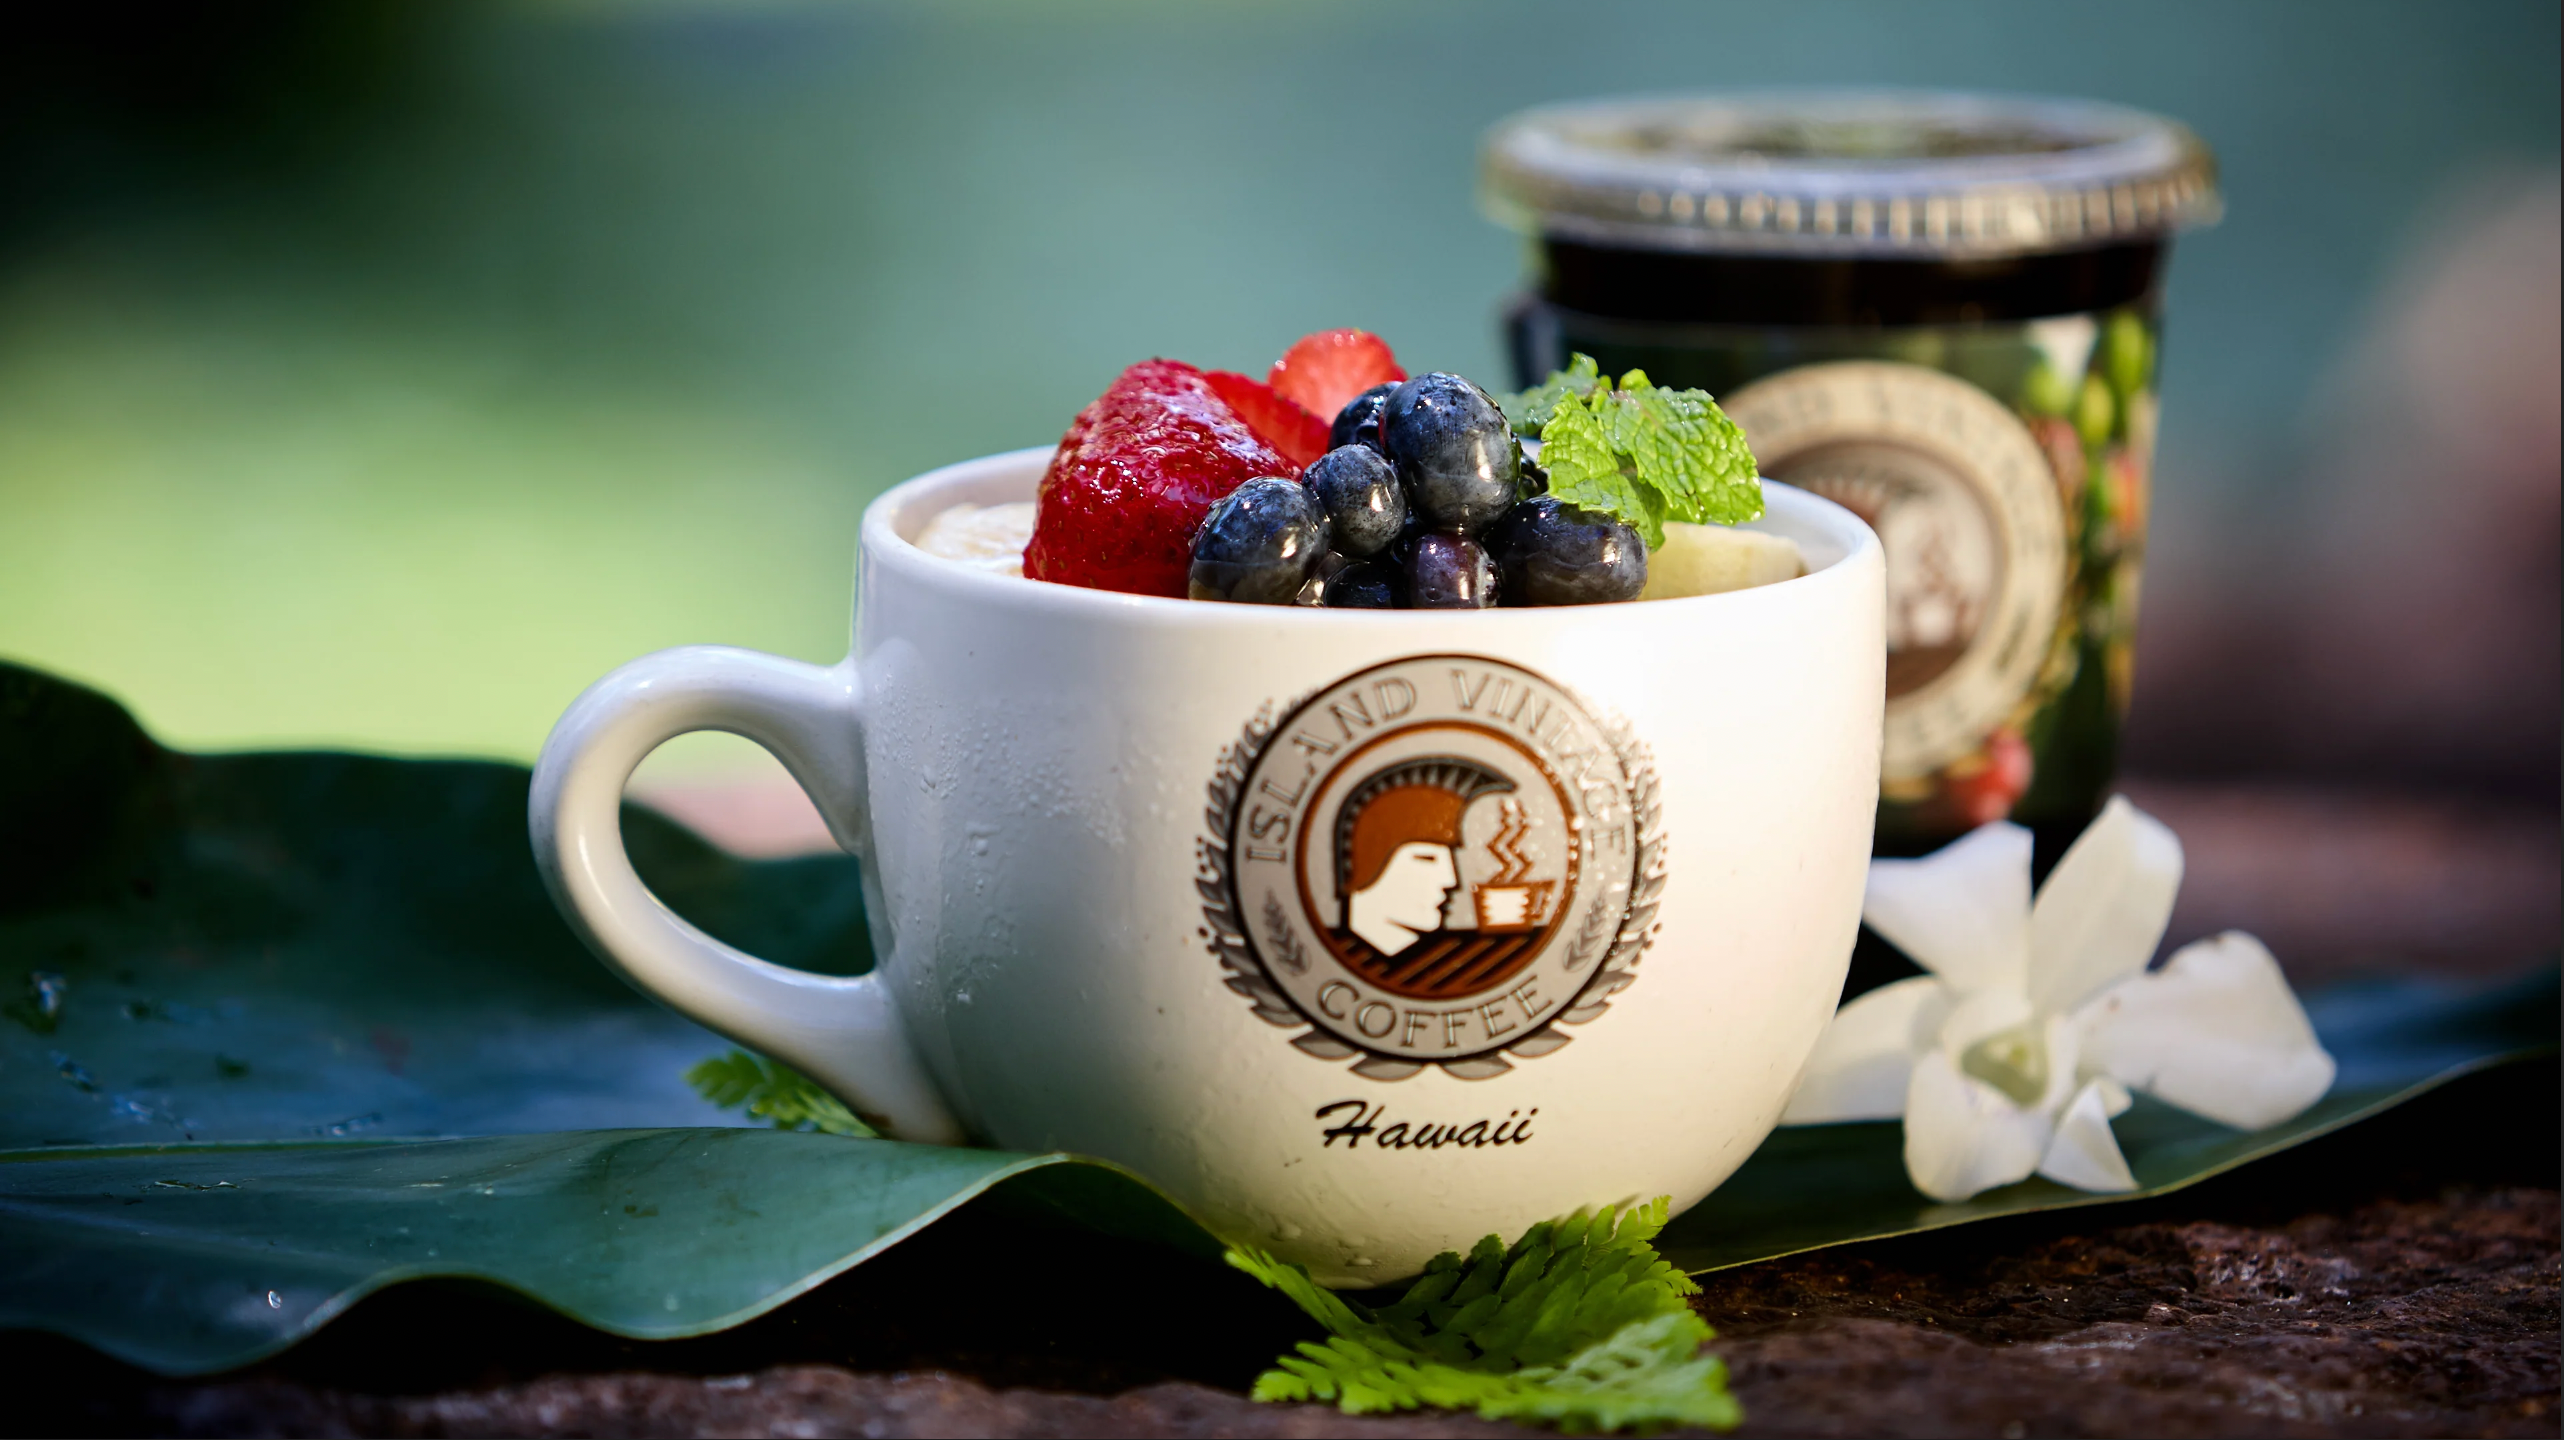 Island Vintage Coffee - Açai bowl and coffee